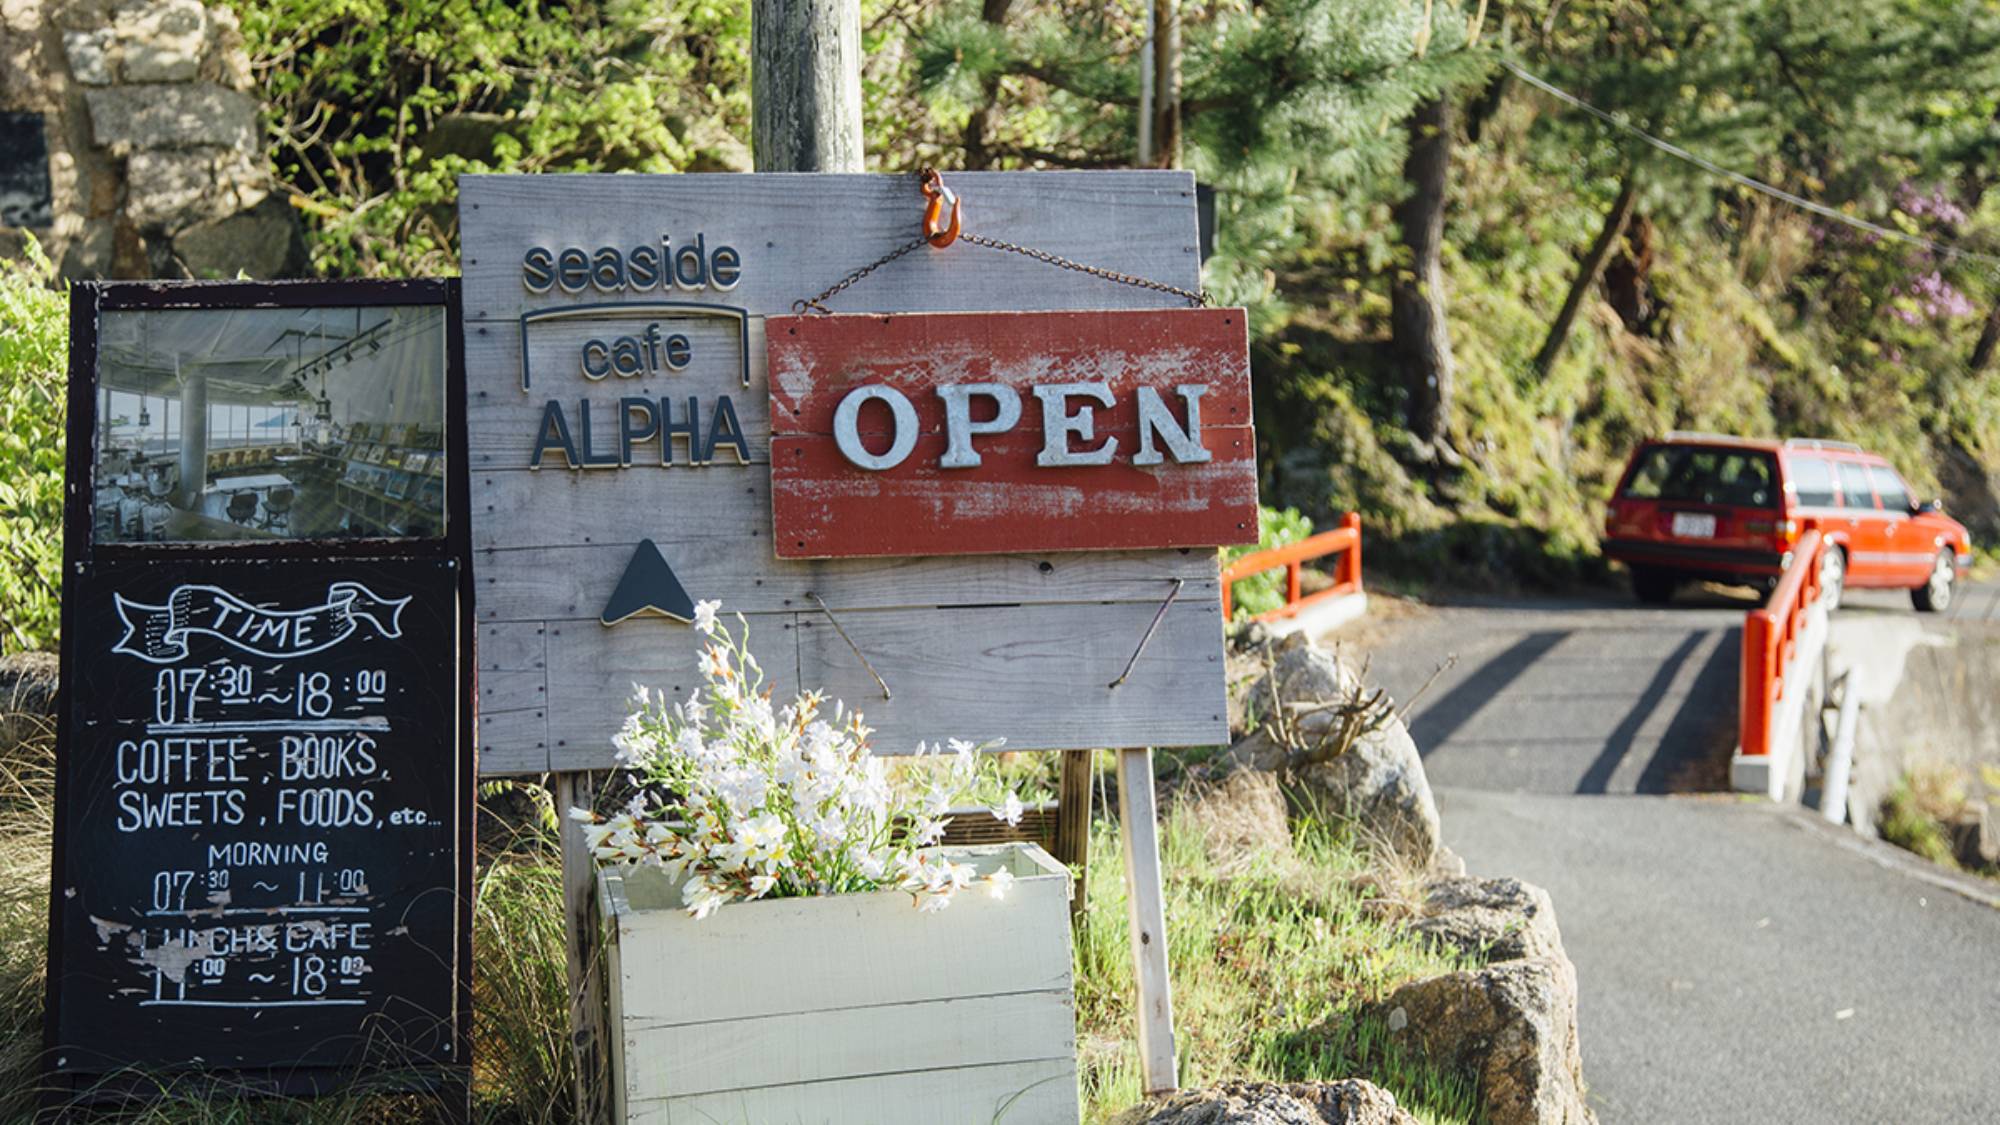 ・Seaside Cafe ALPHA Open／08:00〜18:00 Closed／Wed